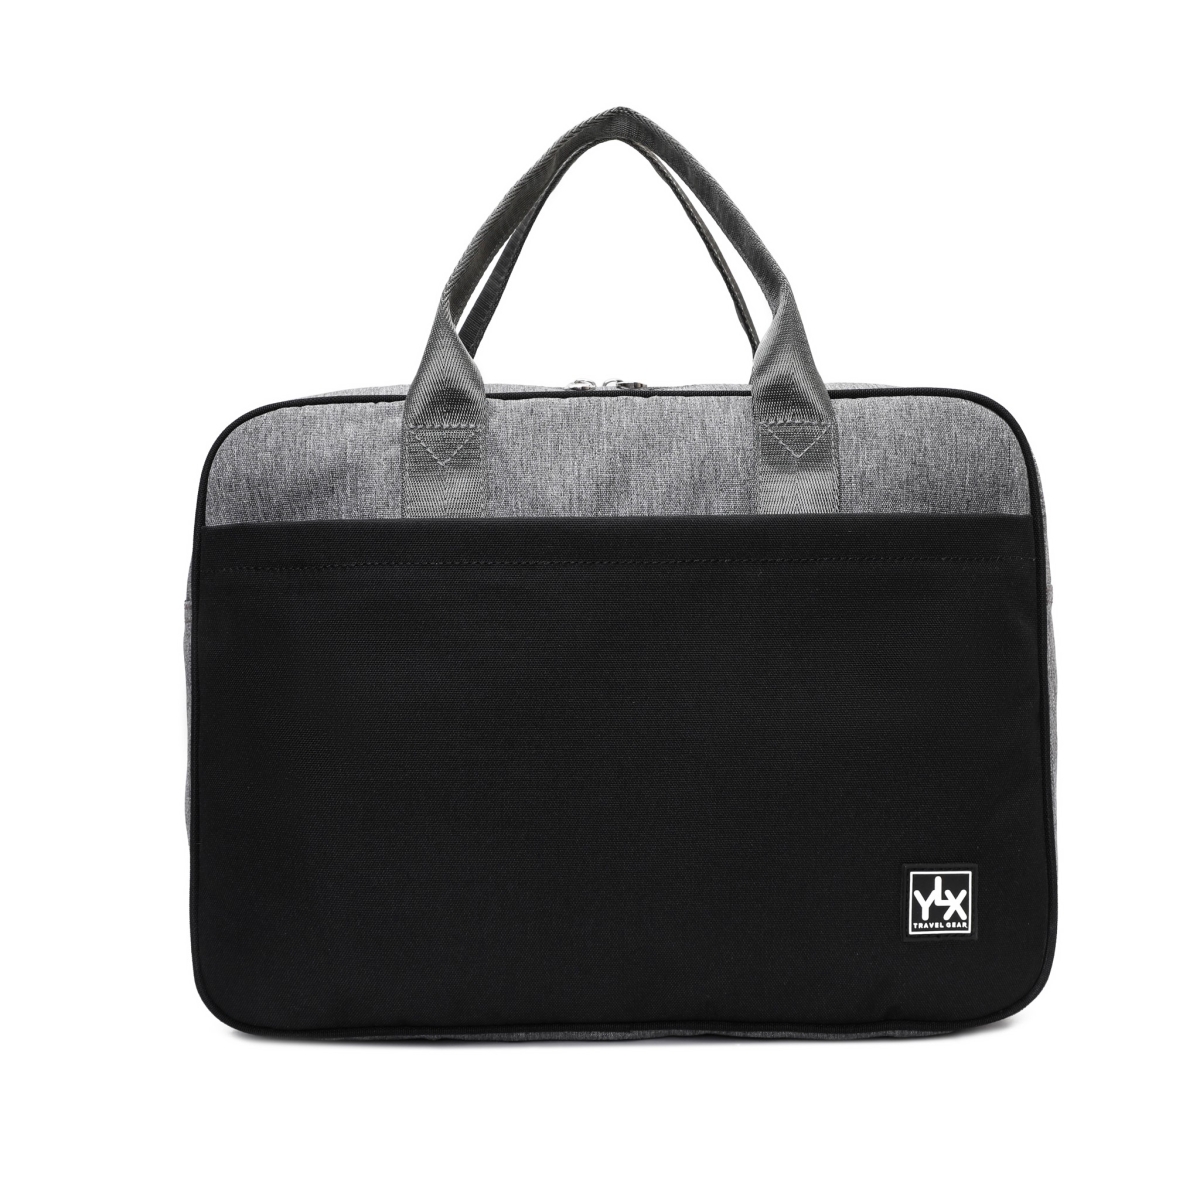 YLX Original Laptop Bag | Dark Grey & Black